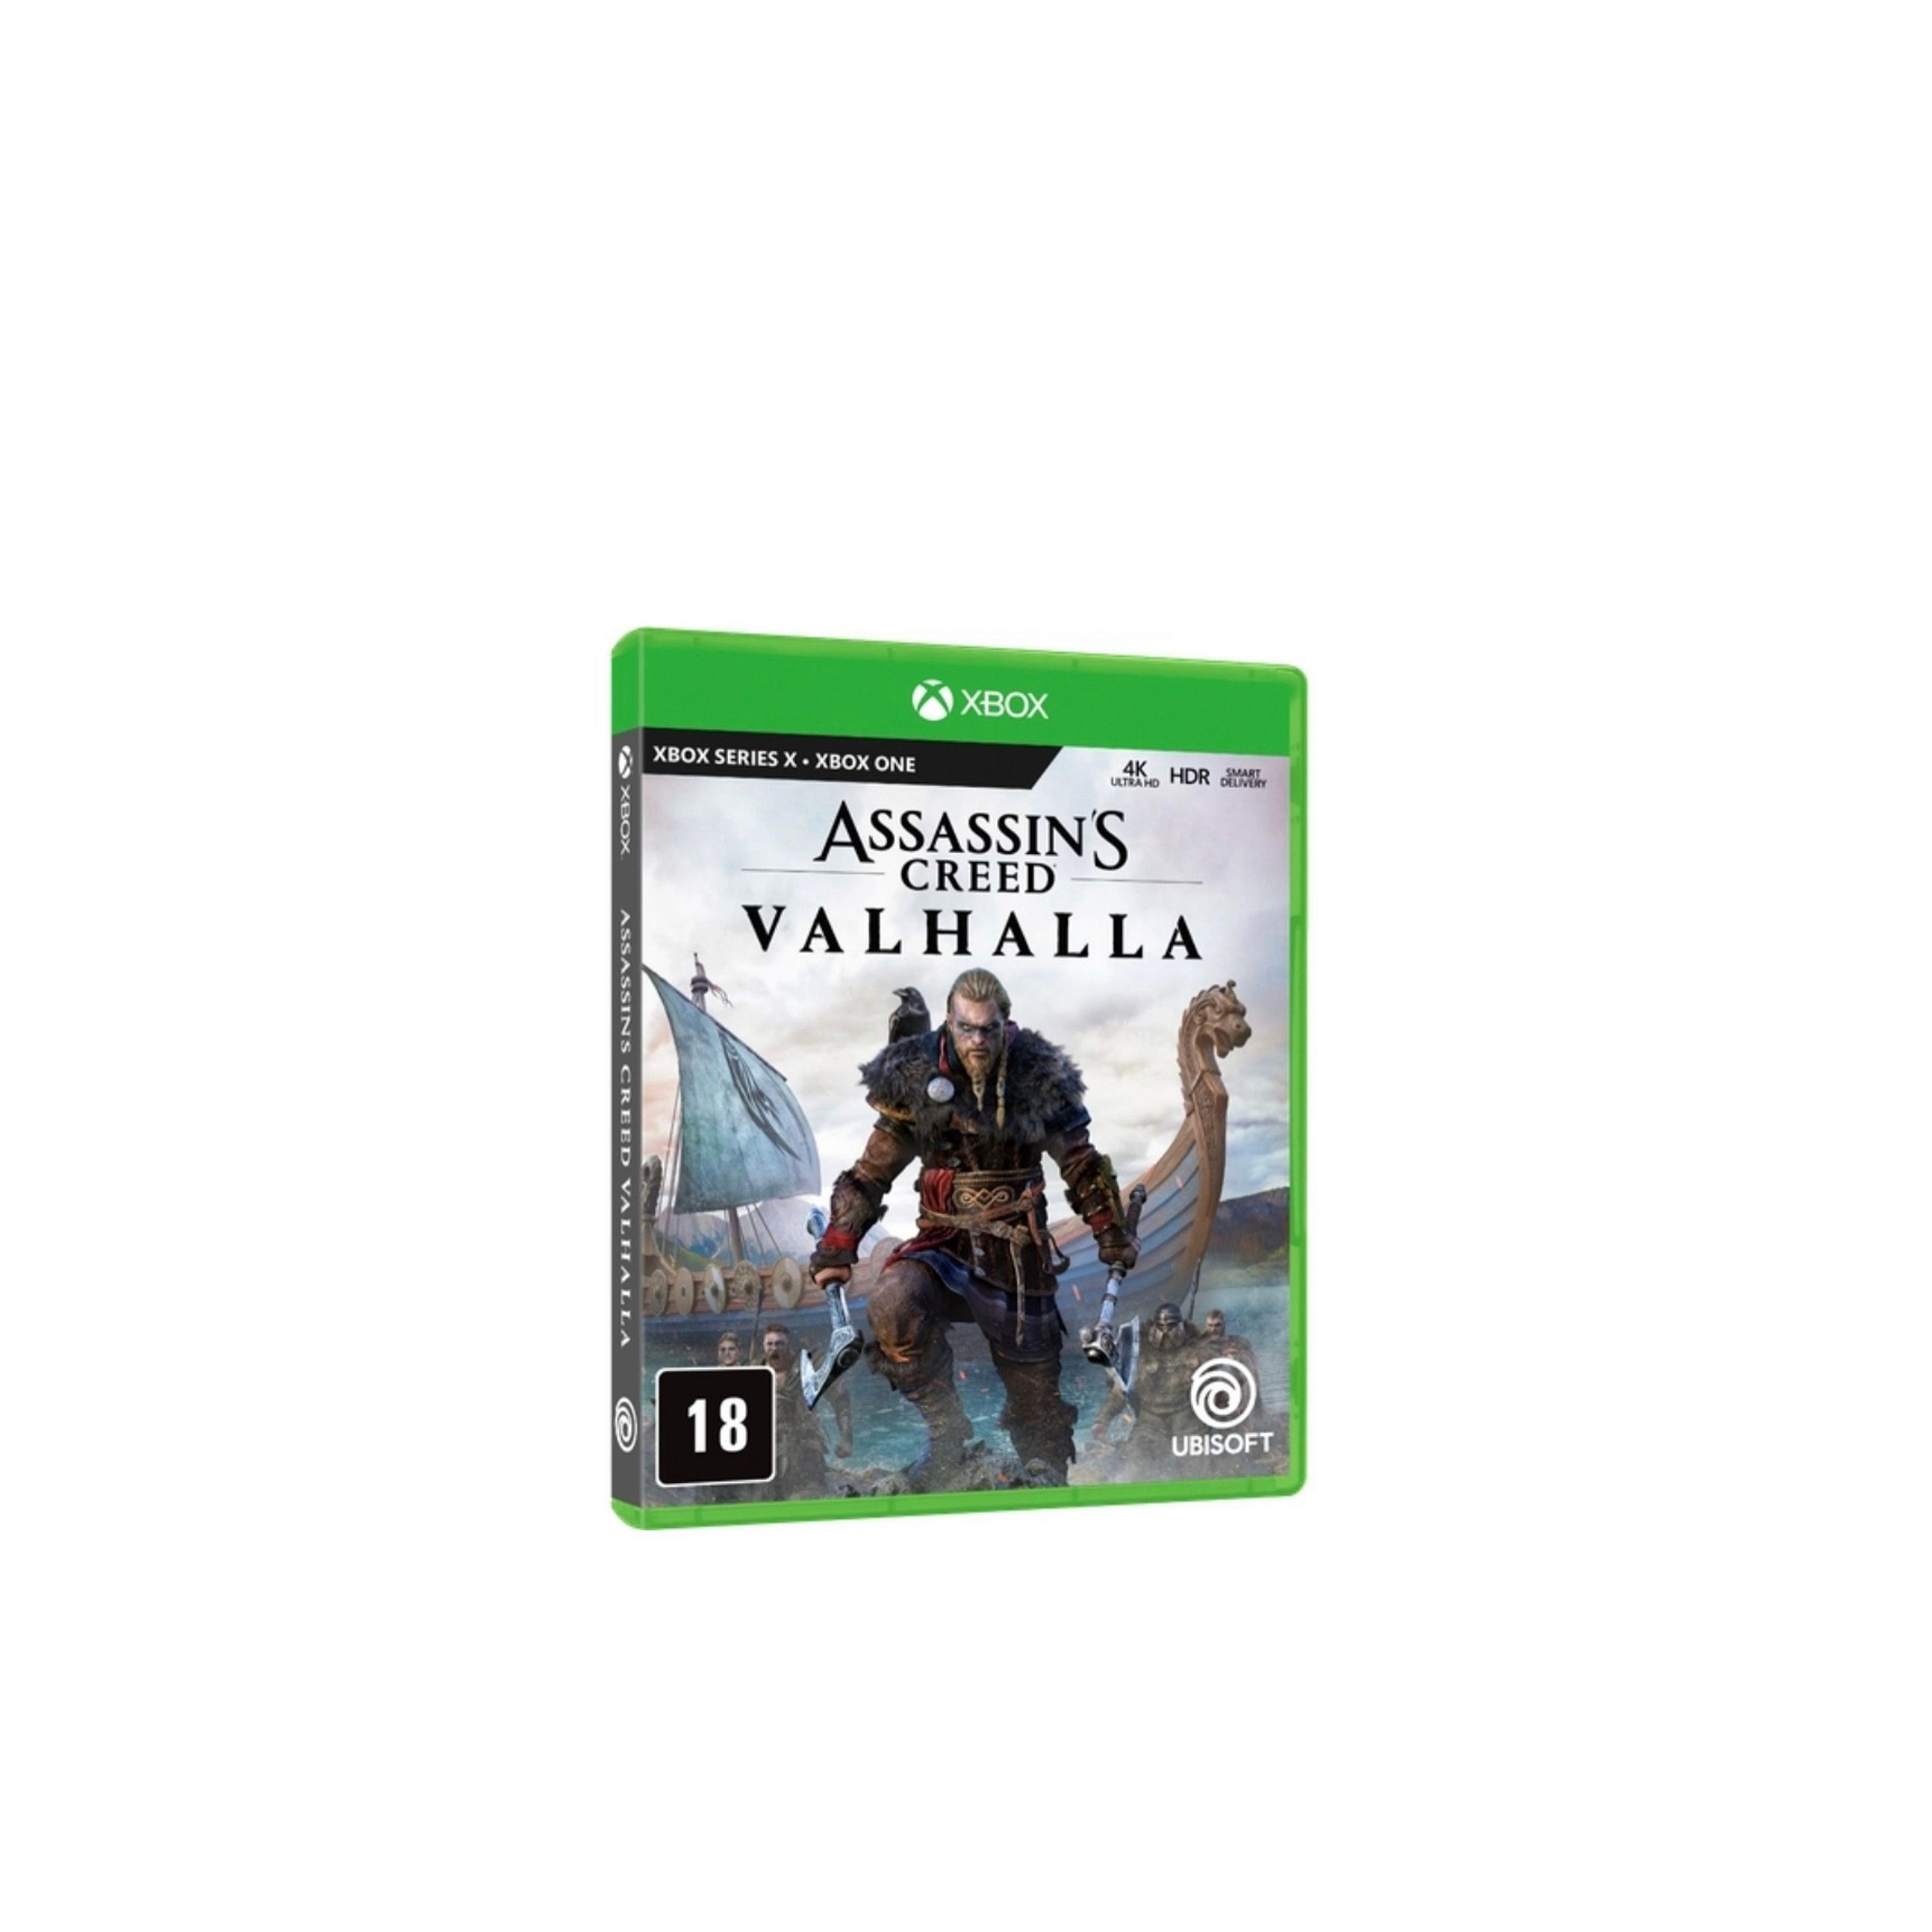 Assassin's Creed Valhalla requisitos de sistema